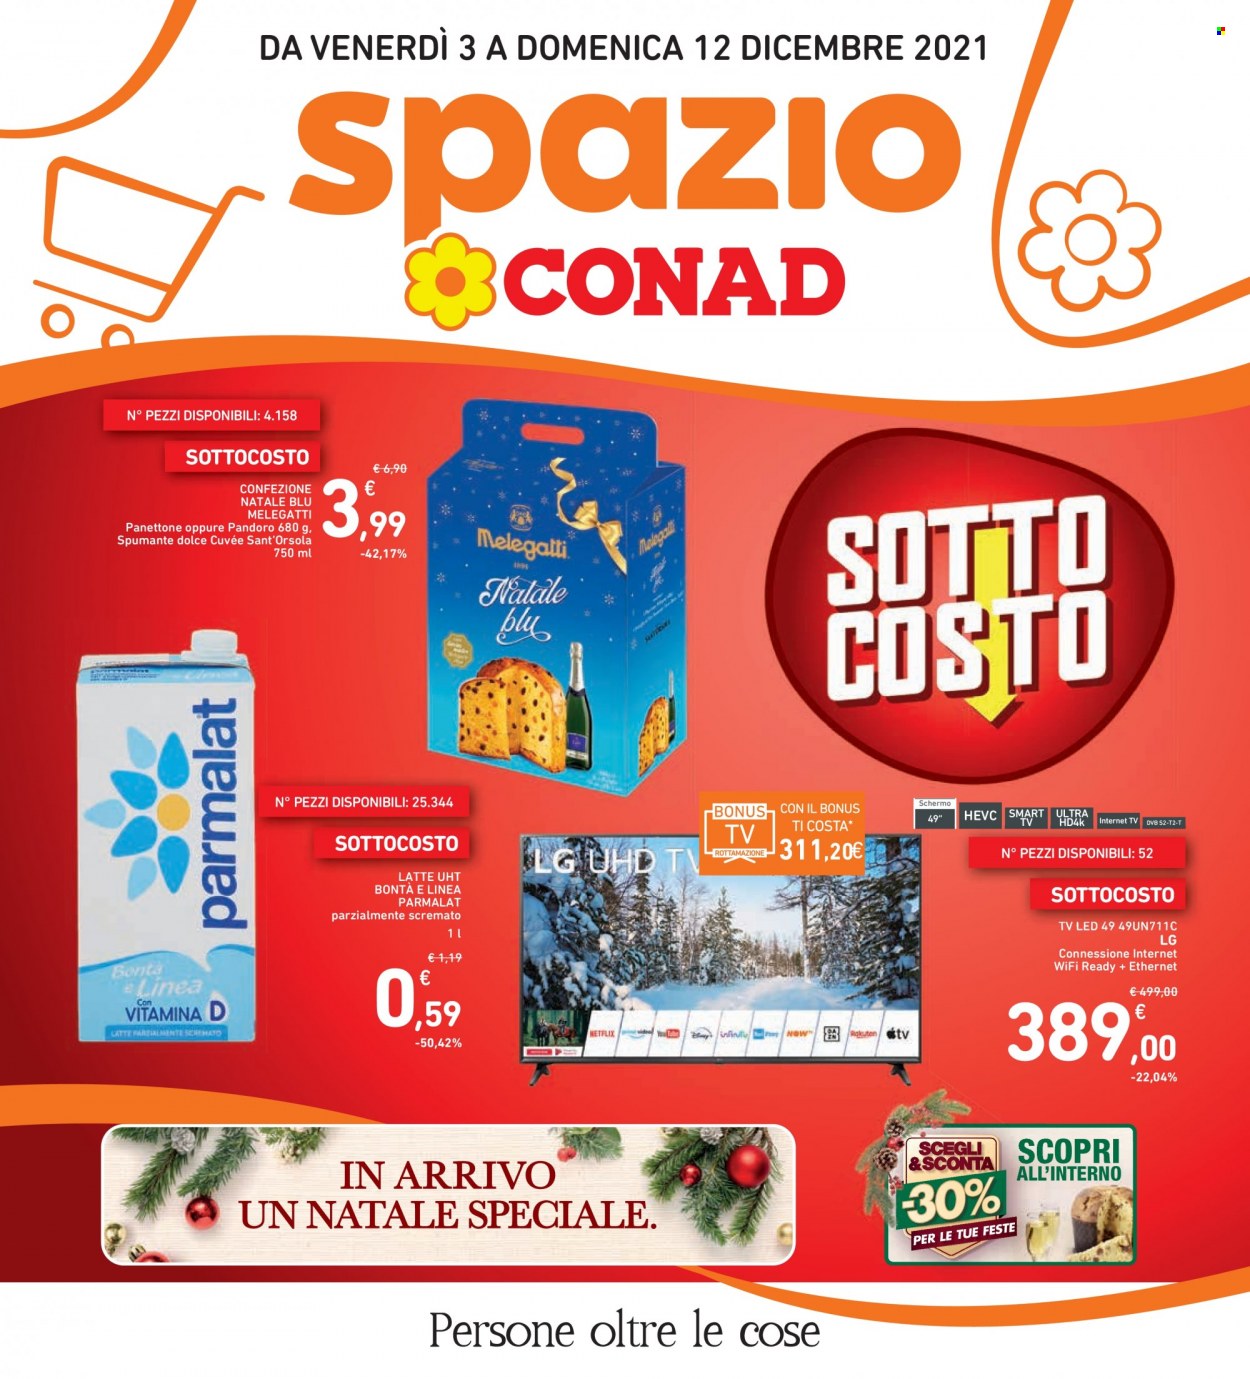 thumbnail - Volantino Conad - 3/12/2021 - 12/12/2021 - Prodotti in offerta - LG, pandoro, panettone, Parmalat, latte, Spumante, LED TV, televisore. Pagina 1.